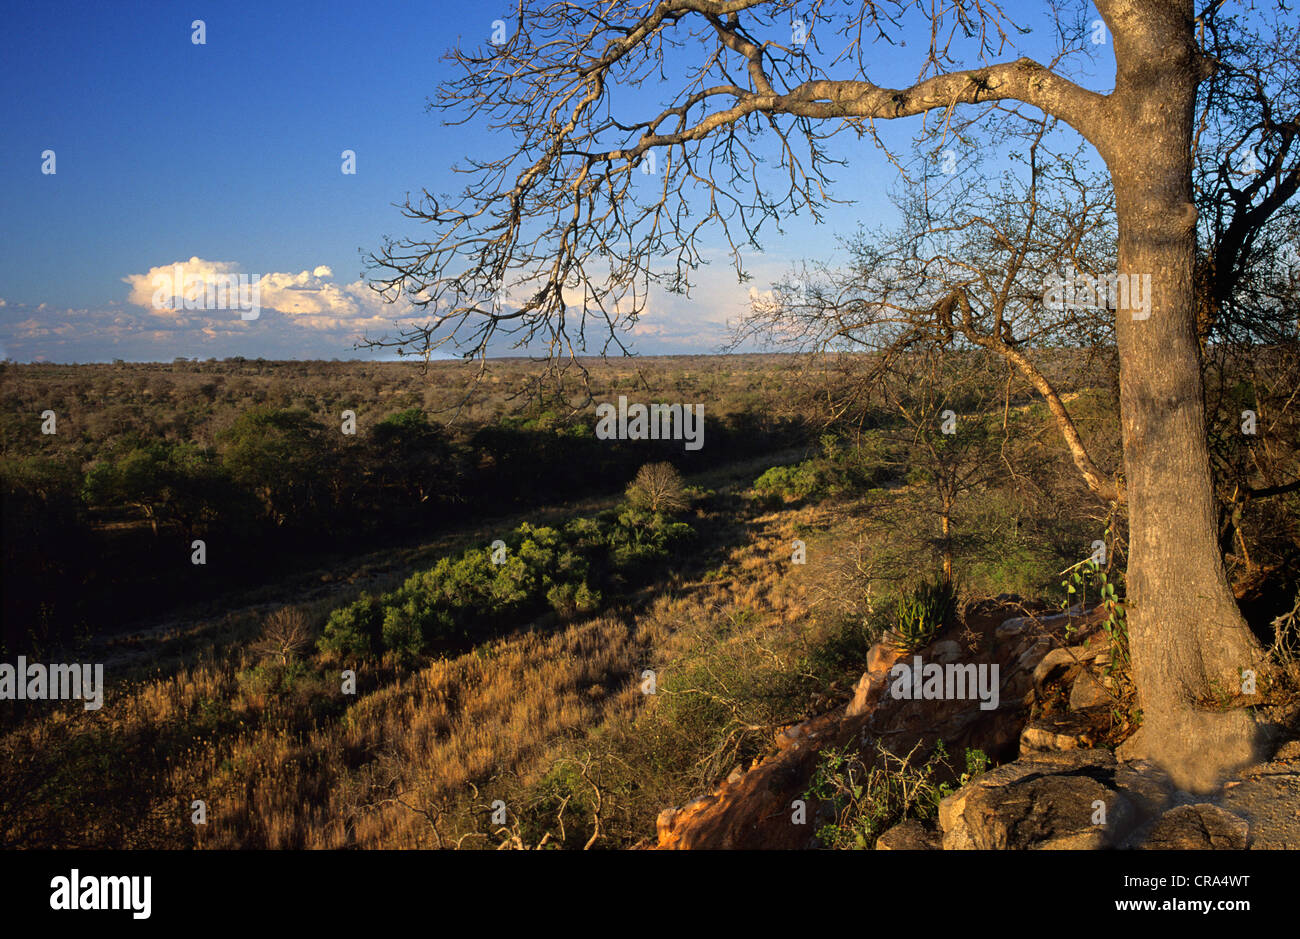 Bushveld in Timbavati area, Kruger National Park, South Africa Stock Photo